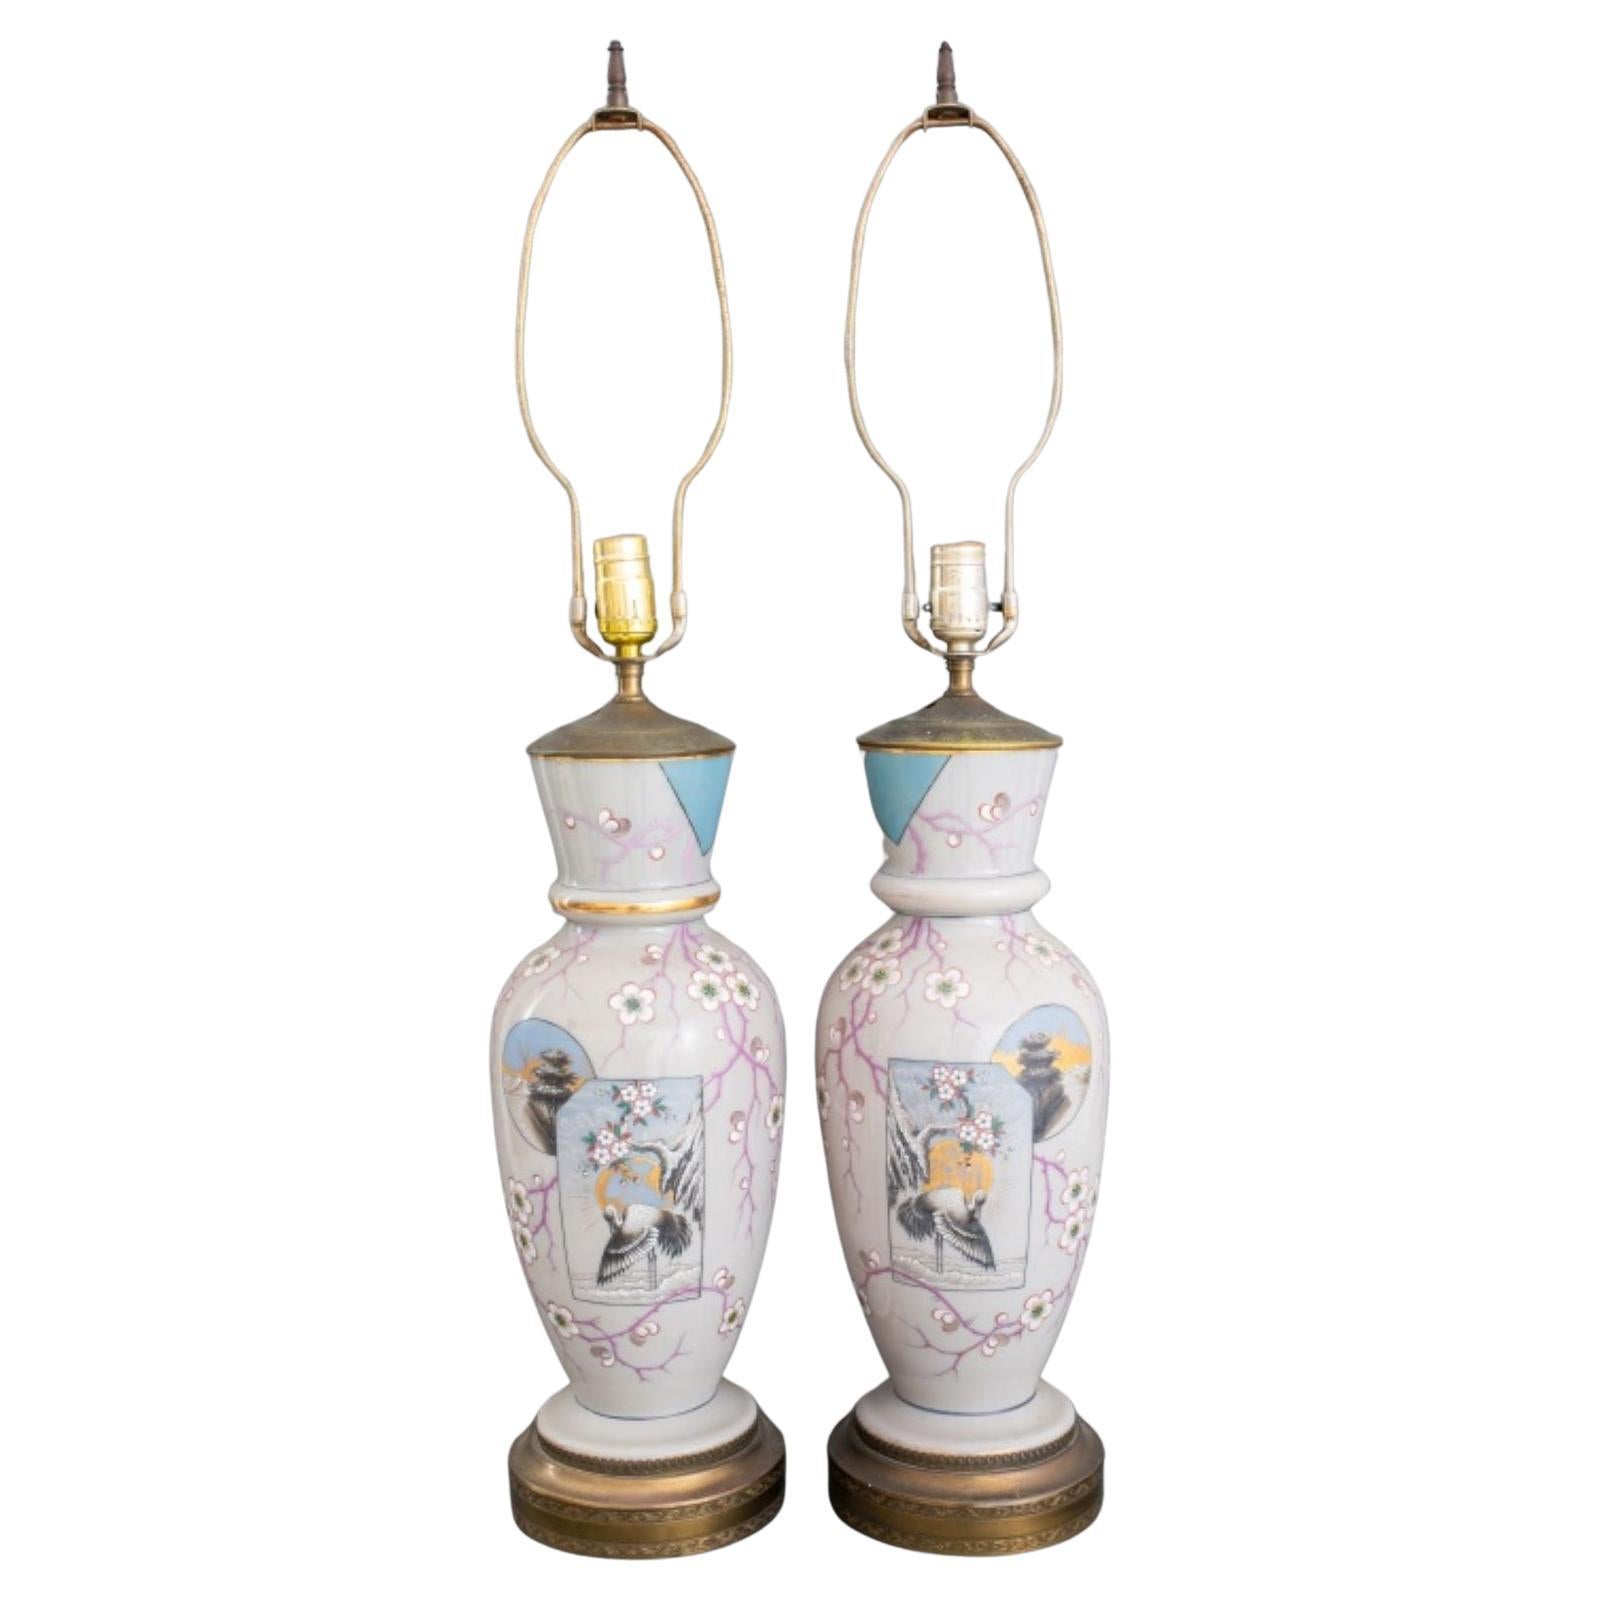 Aesthetic Movement Porcelain Lamps, Pair